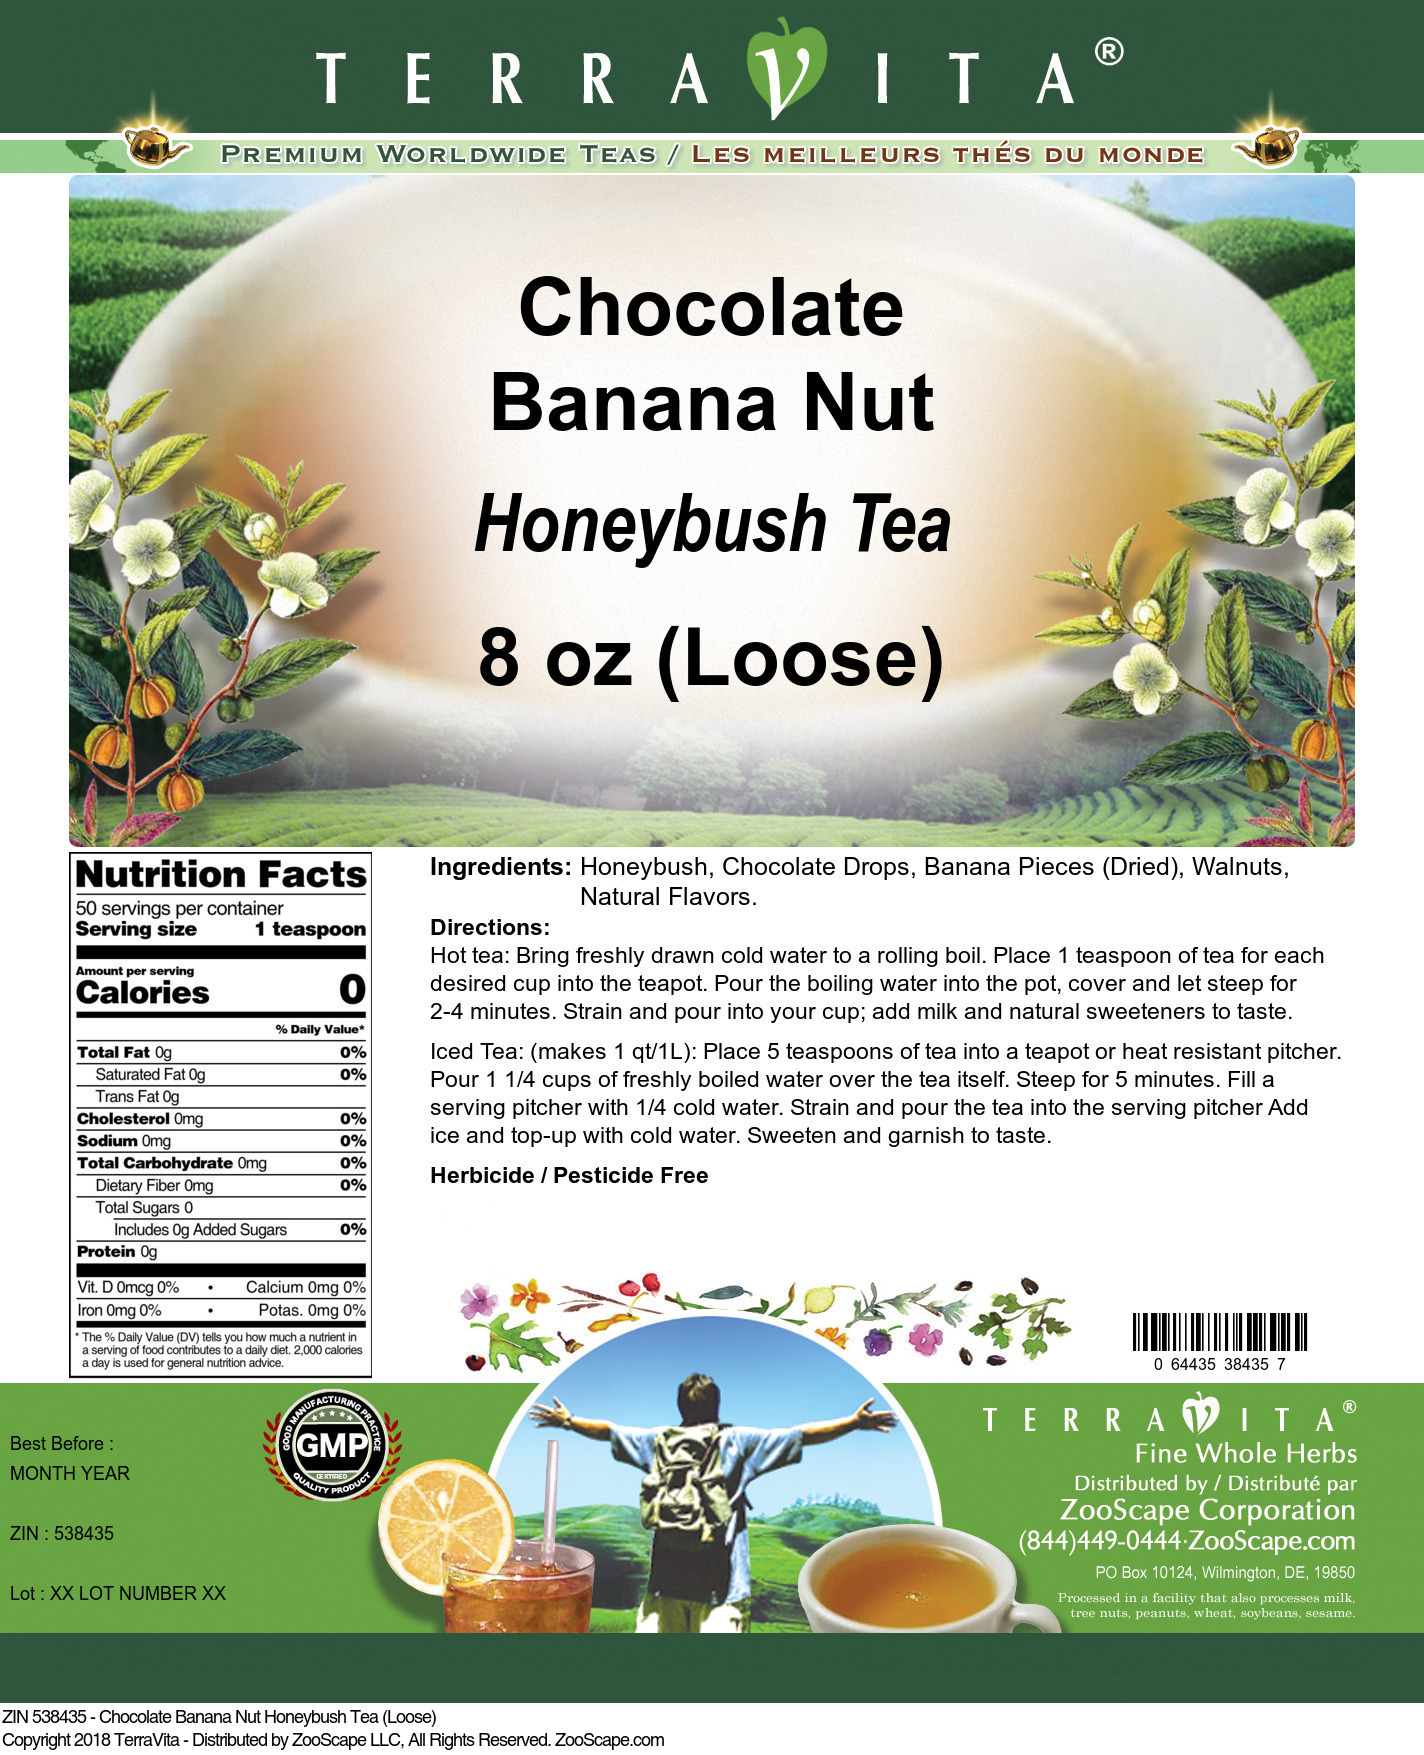 Chocolate Banana Nut Honeybush Tea (Loose) - Label